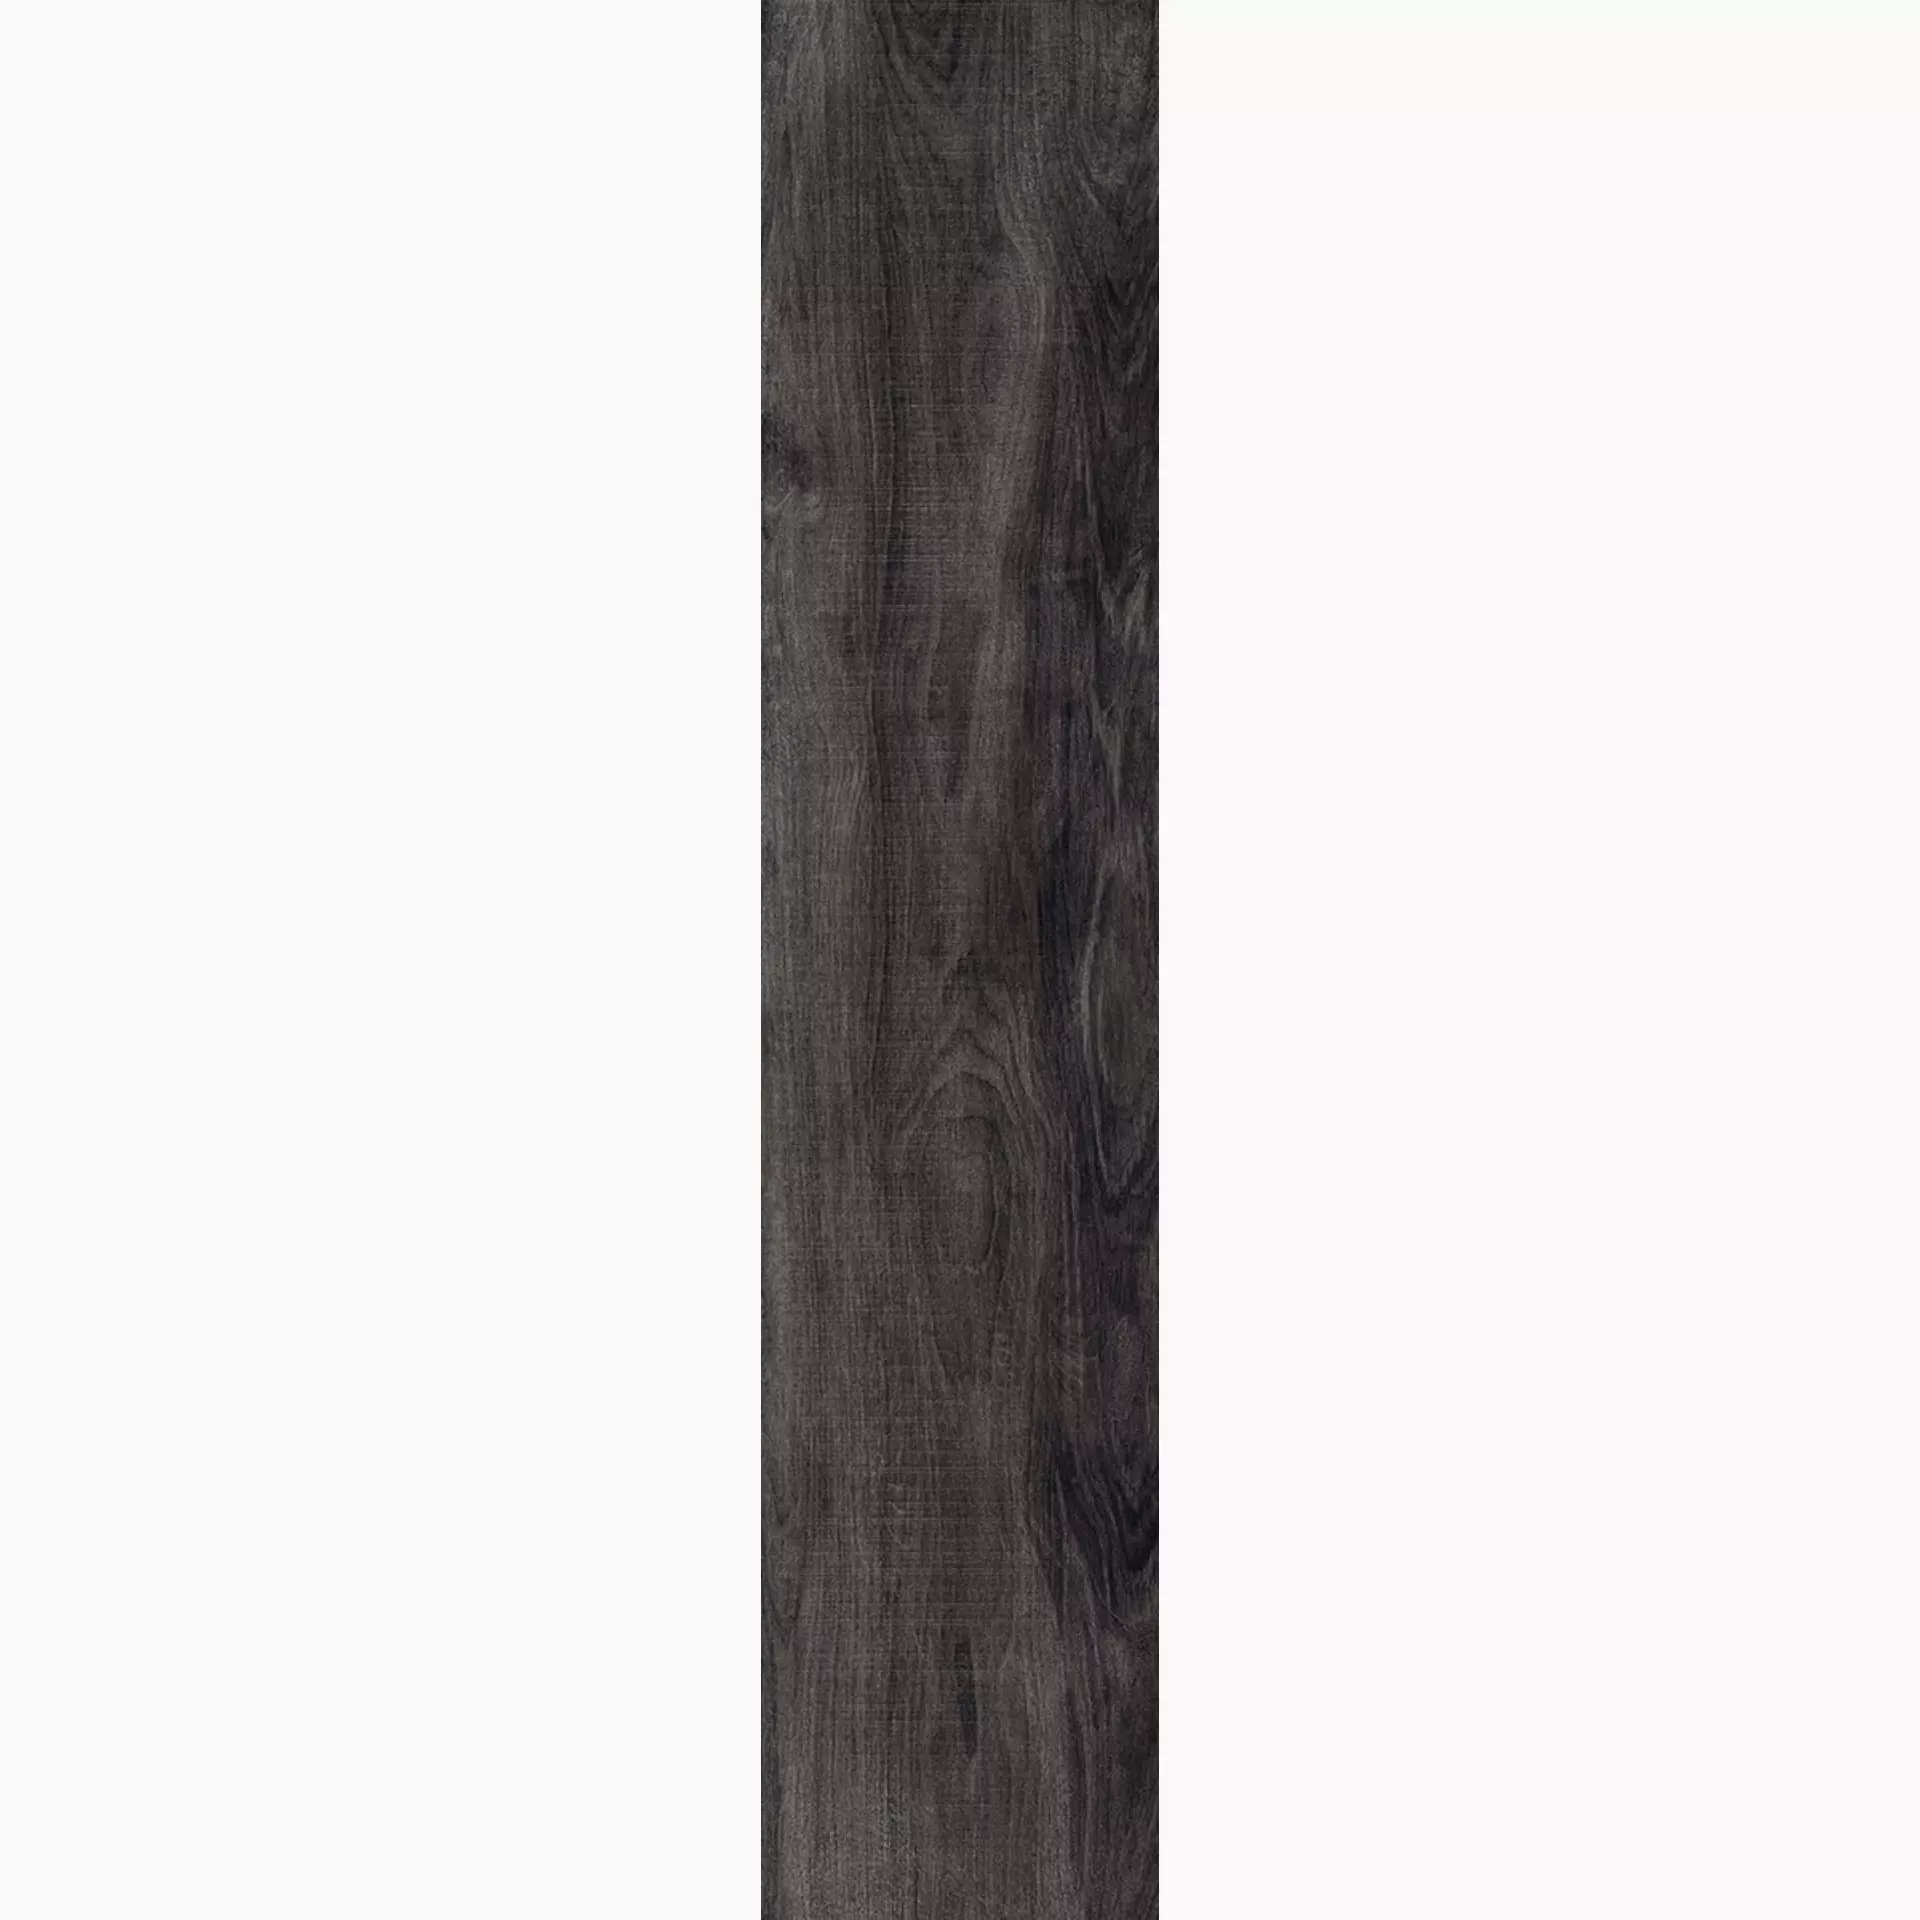 Rondine Greenwood Nero Naturale J86329 24x120cm 9,5mm